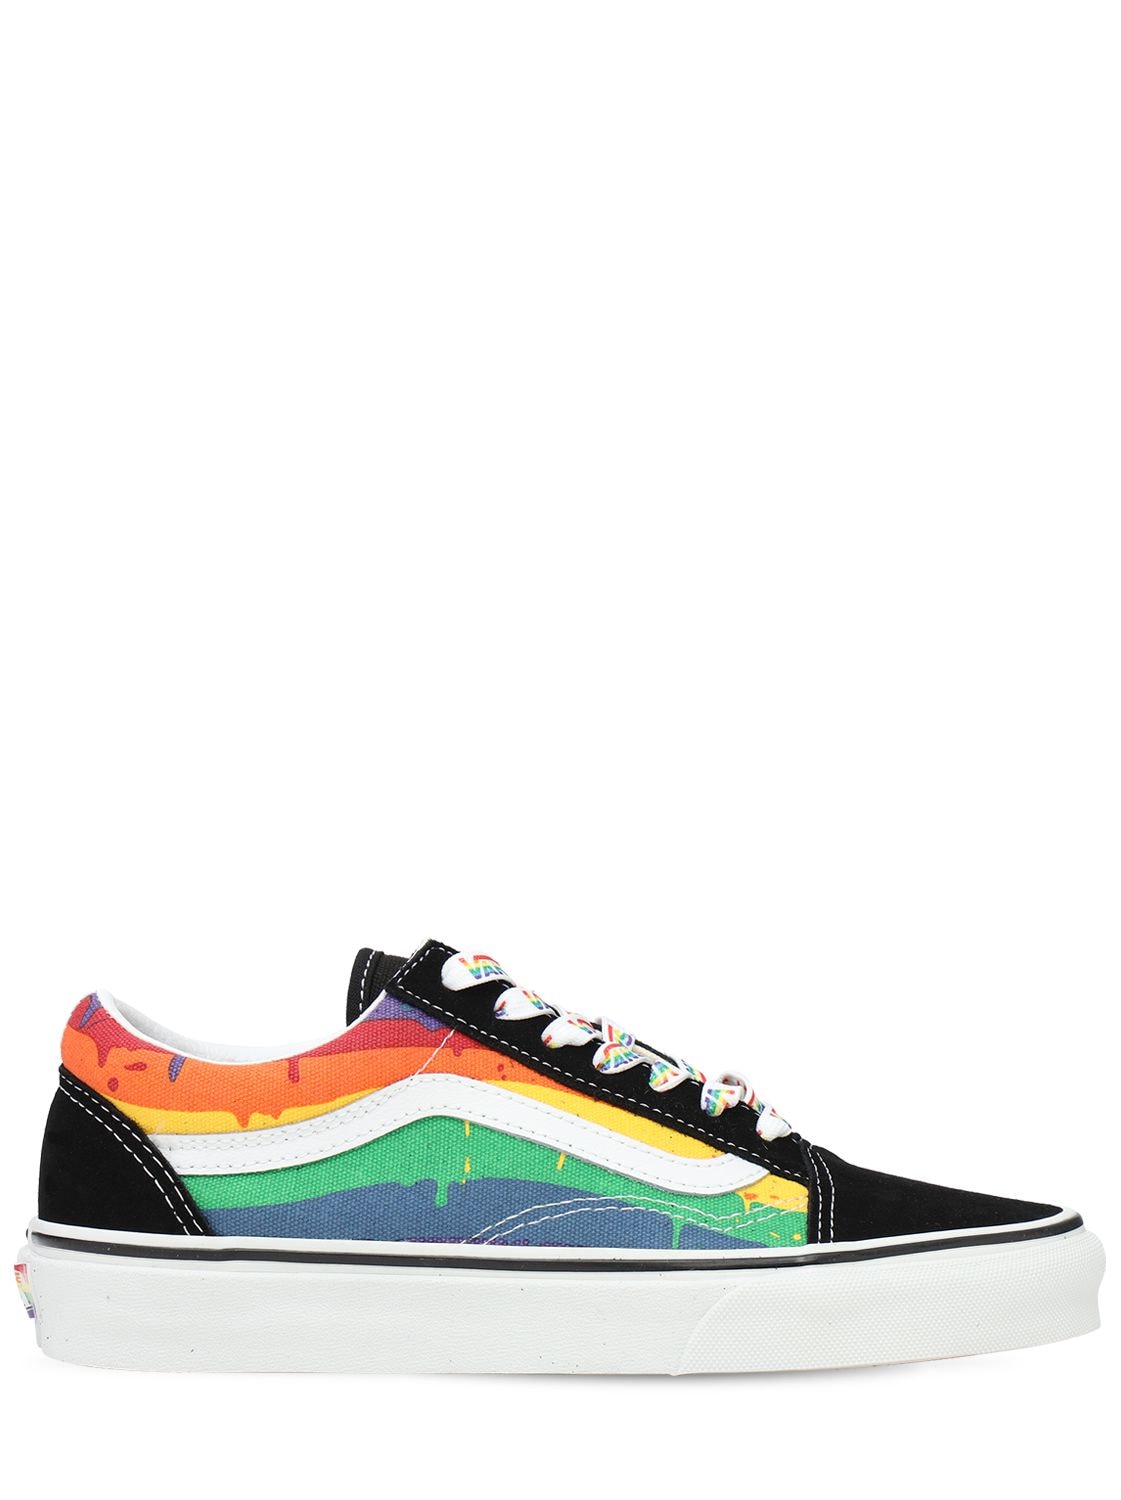 Vans - Old skool rainbow drip sneakers - Multicolor | Luisaviaroma